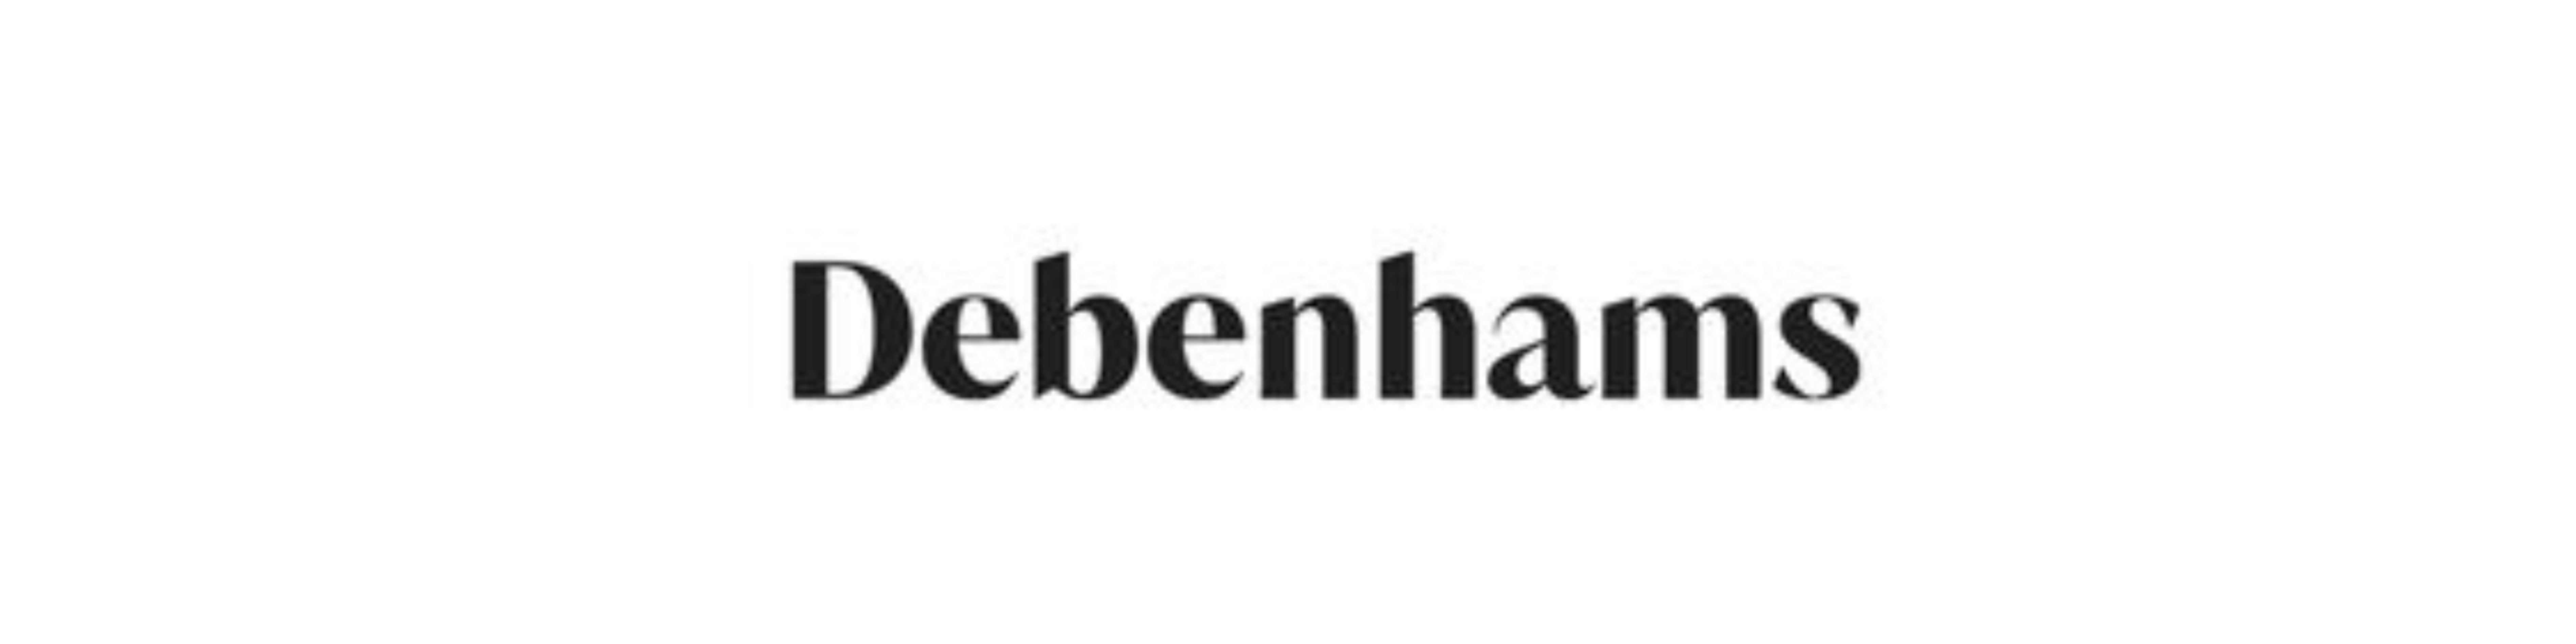 Debenhams UK logo